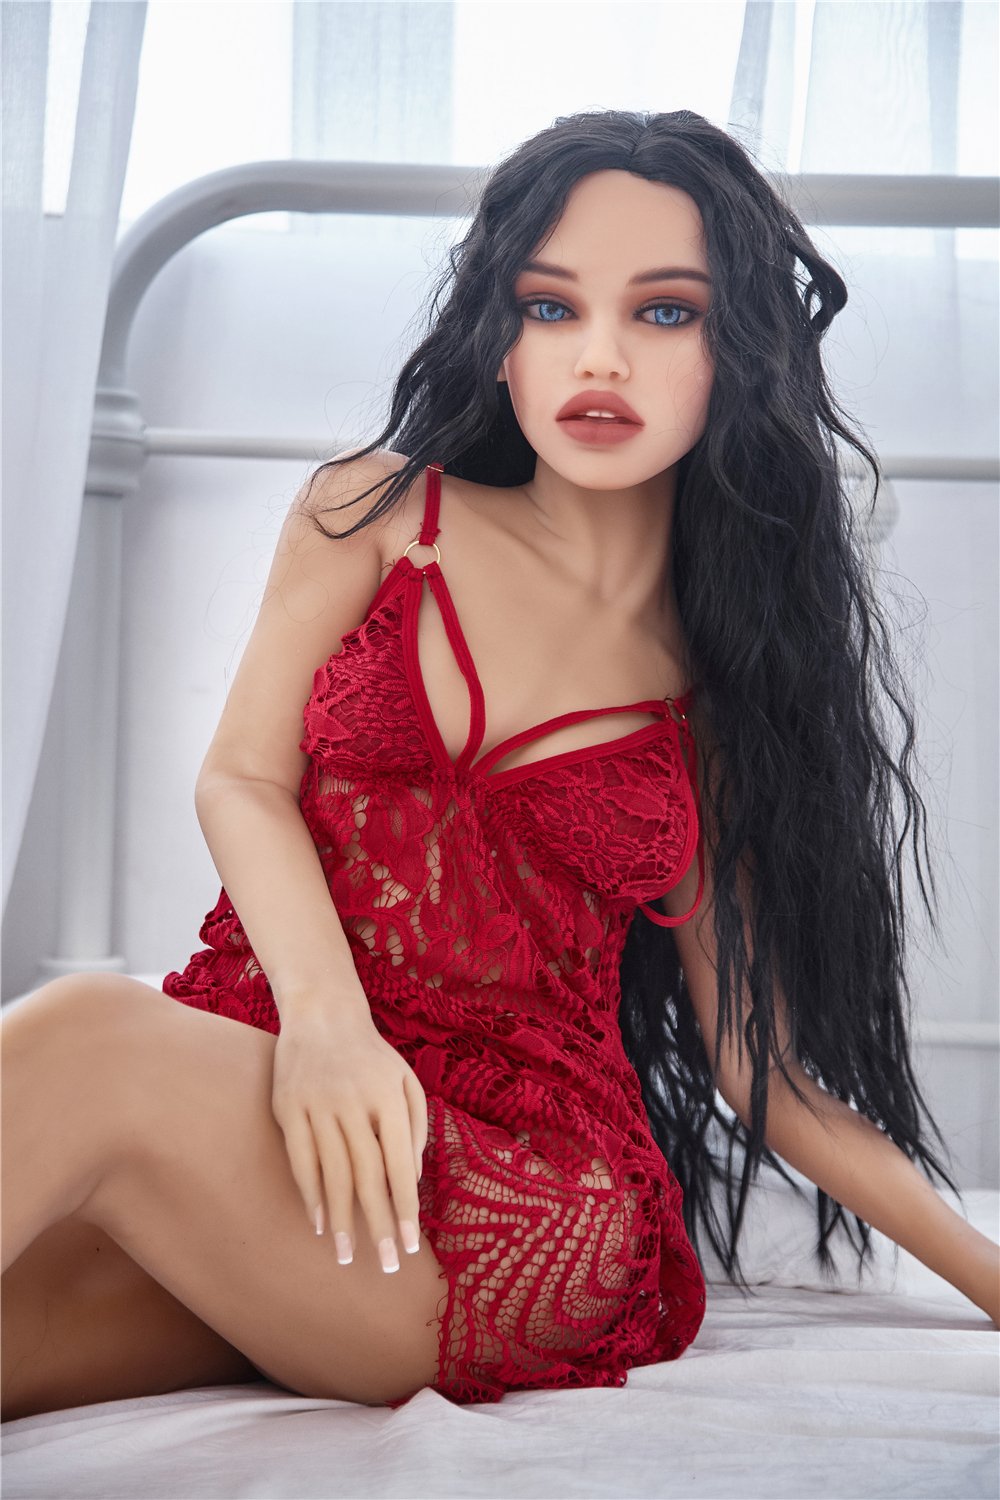 sophie 150cm black hair athletic flat chested tan skin tpe sex doll(11)